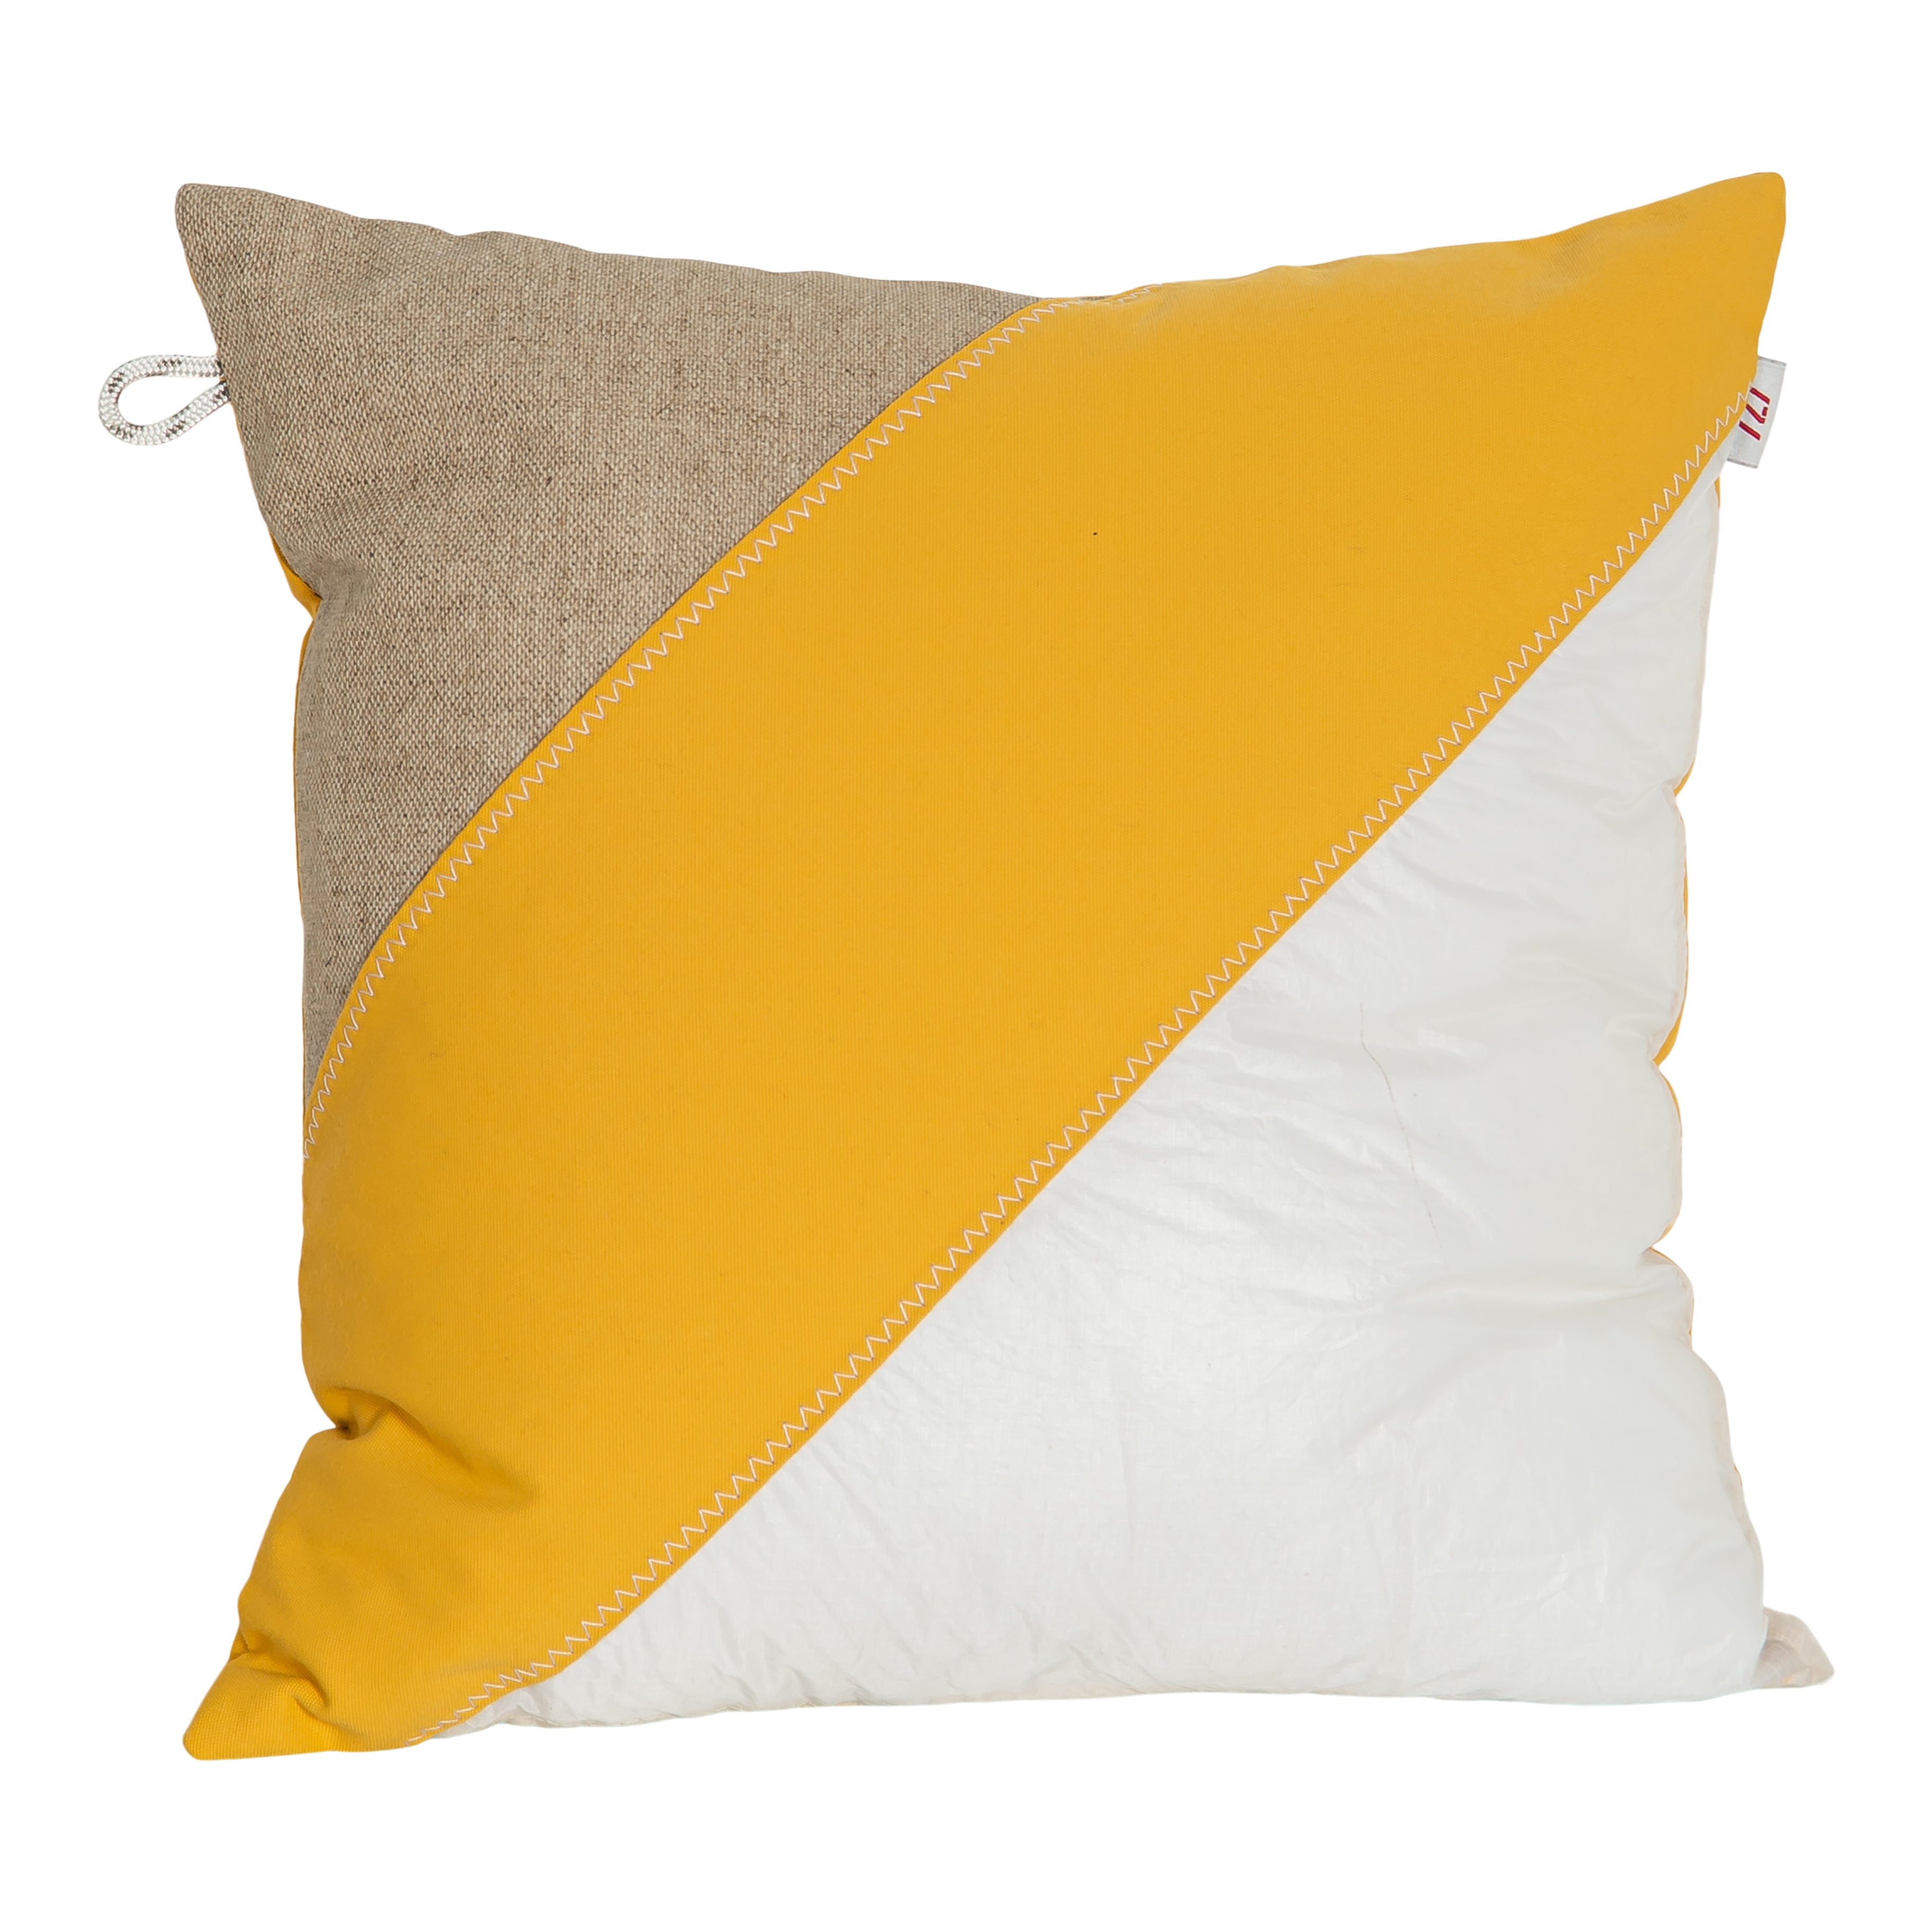 Hurley Yellow Pillows (set of 3)